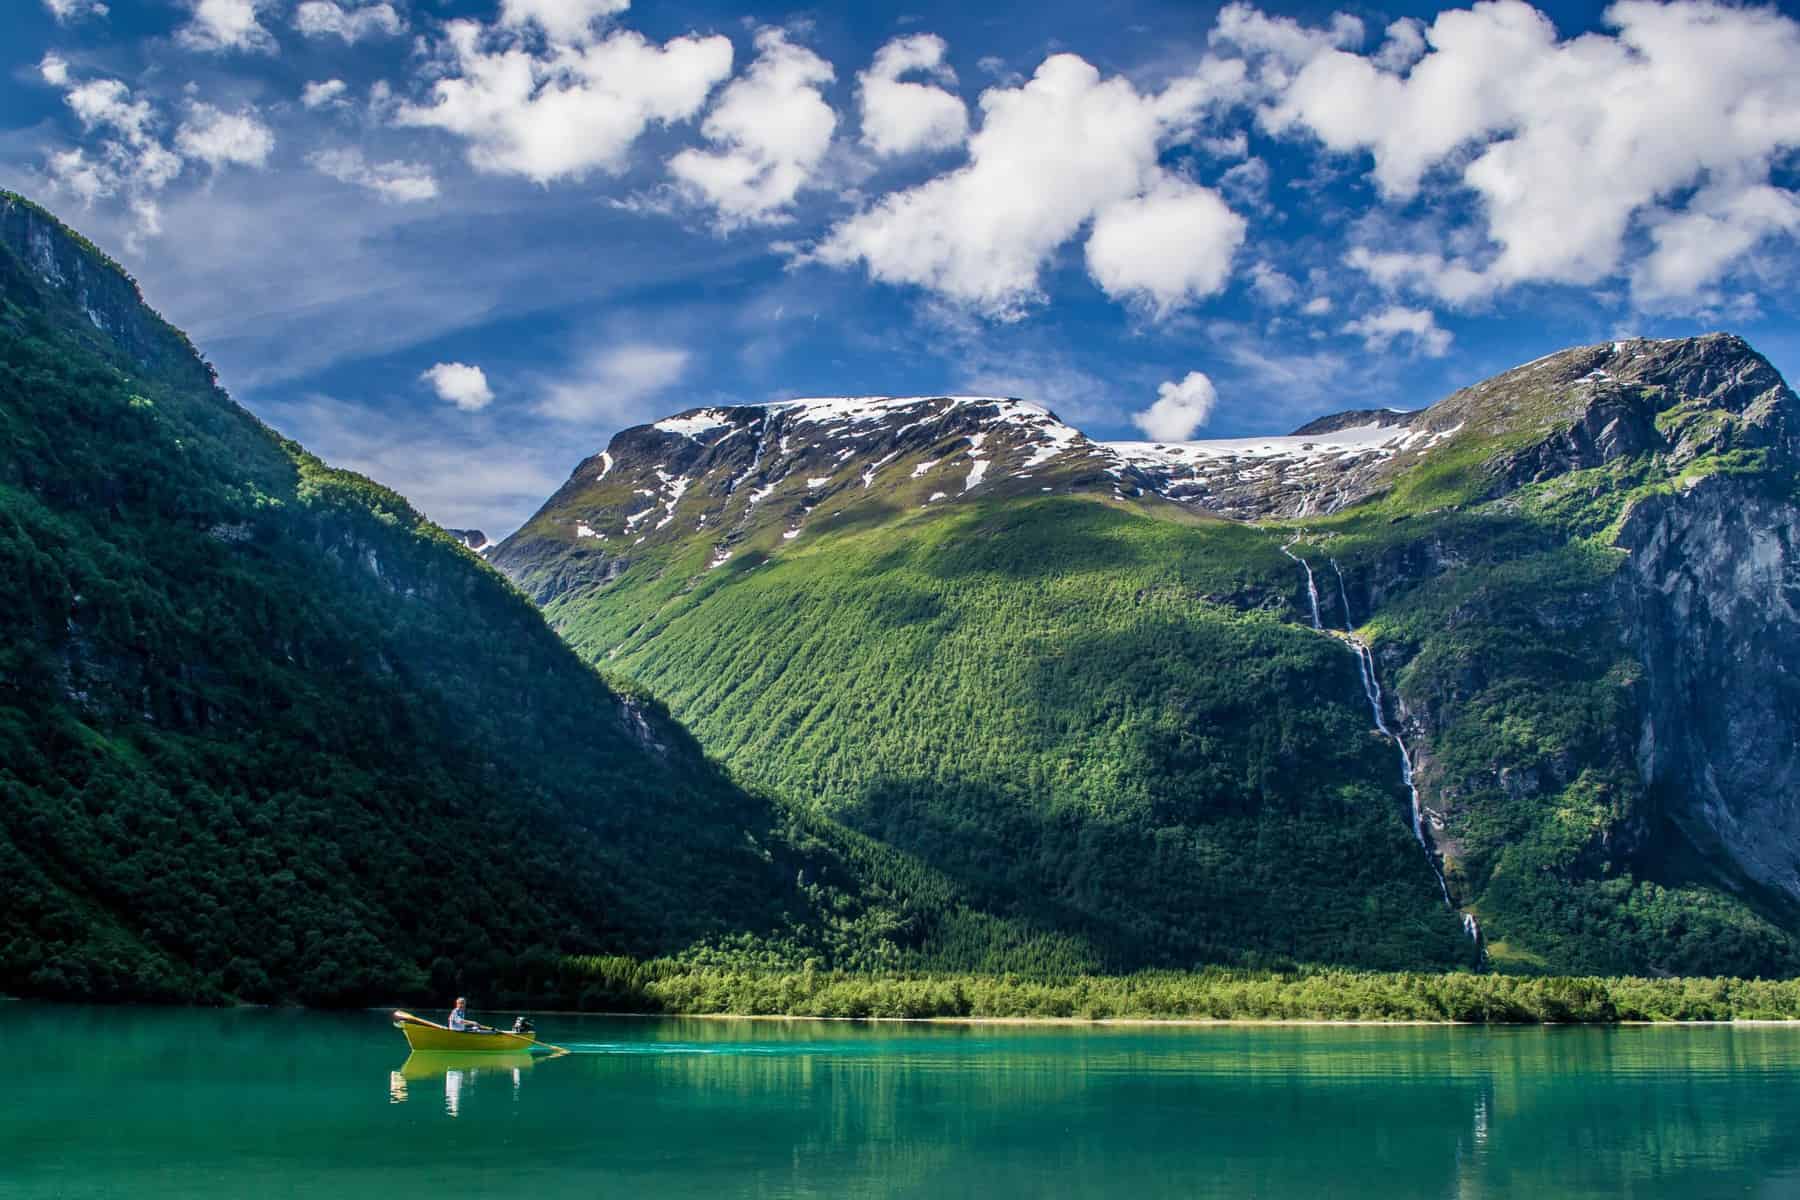 Lodalen Valley and Lovatnet Lake. Photo by Paula Lauberg